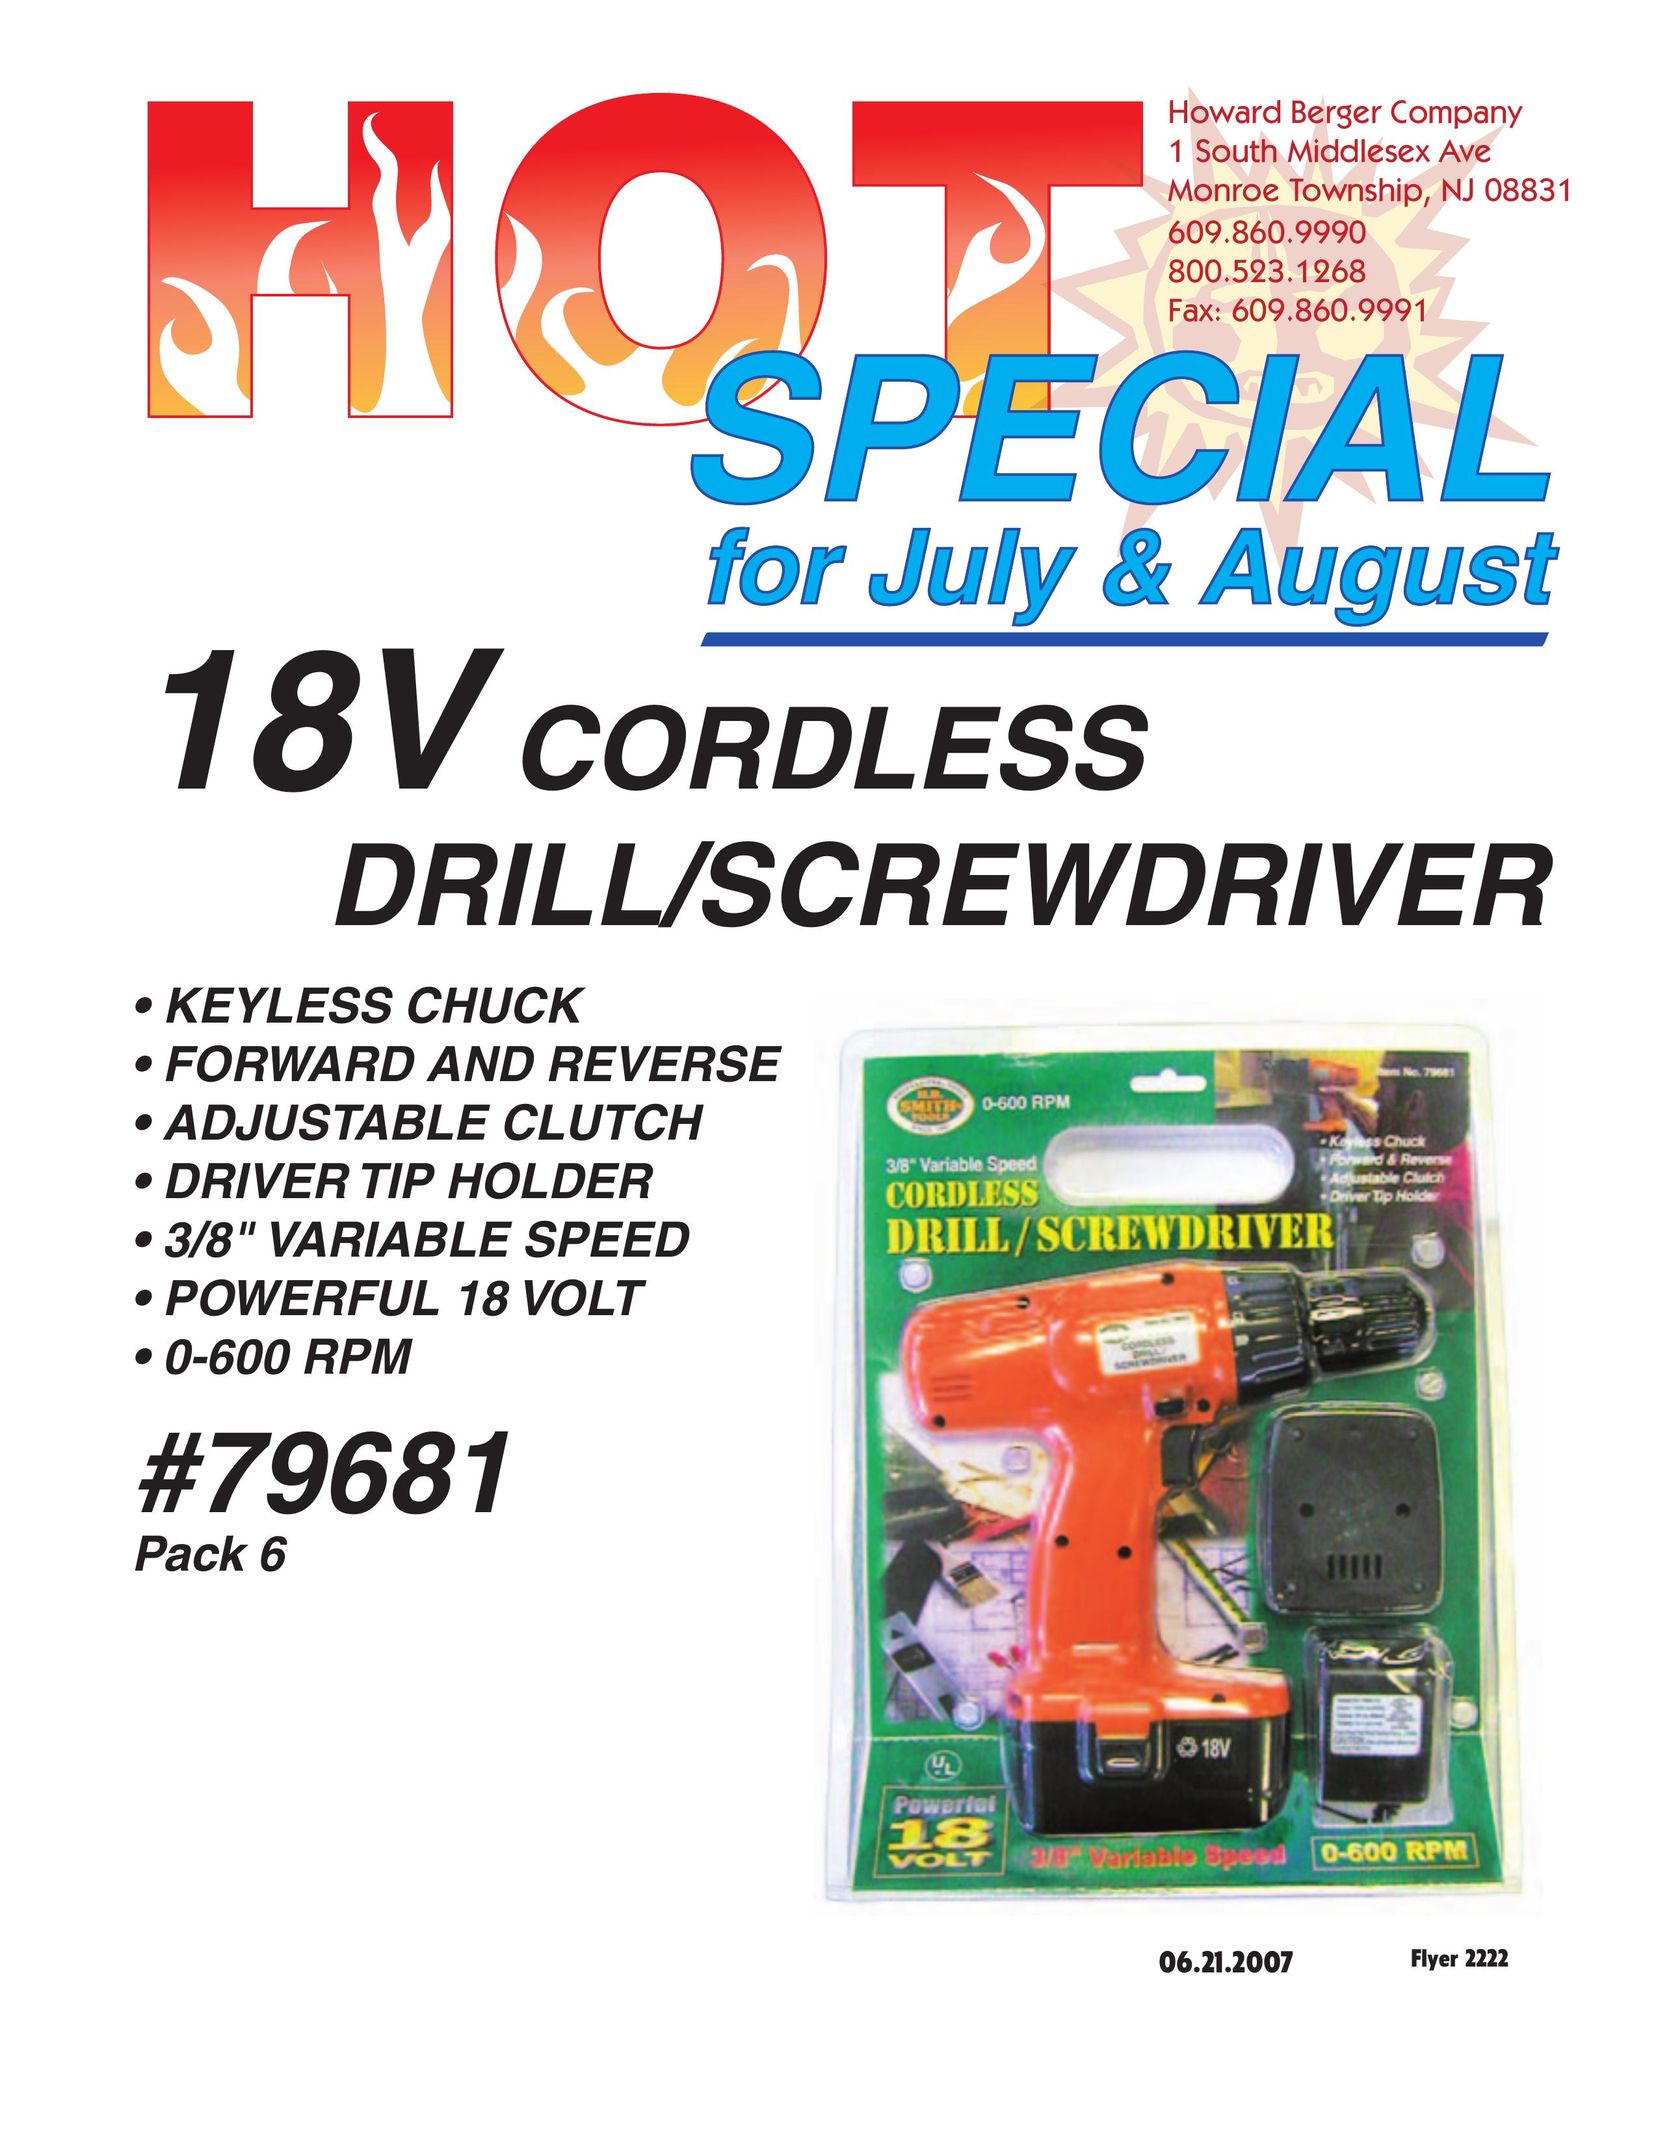 Howard Berger Cordless Drill and Screwdriver Drill User Manual